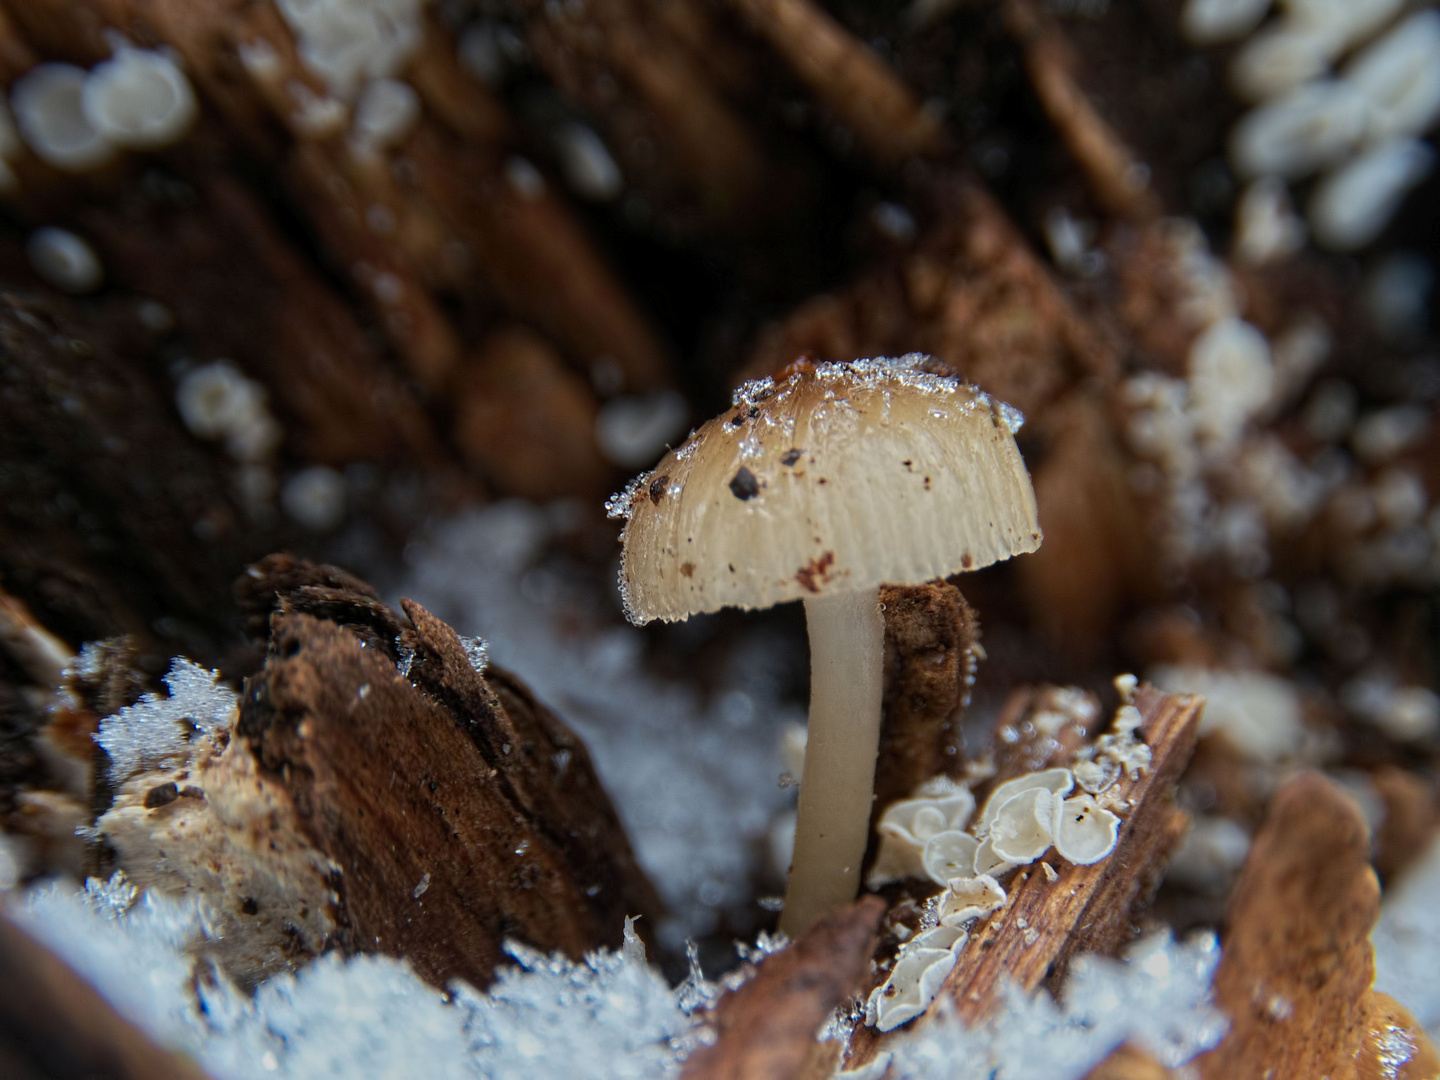 Pilze im Winter